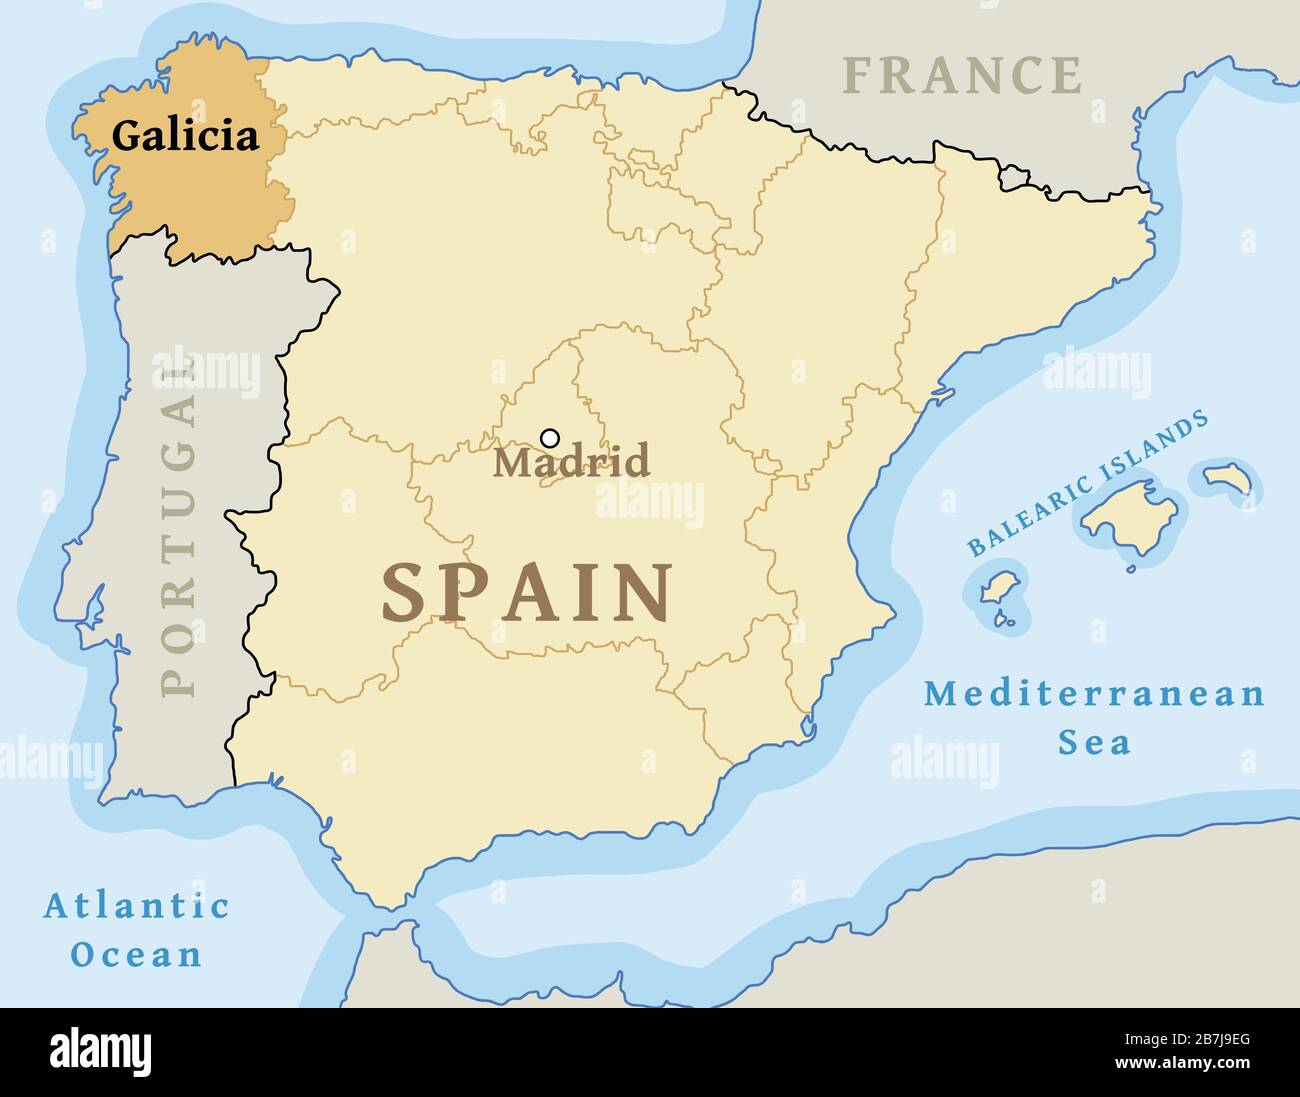 Galicia autonomous community location map within Spain. Vector illustration. Stock Vector